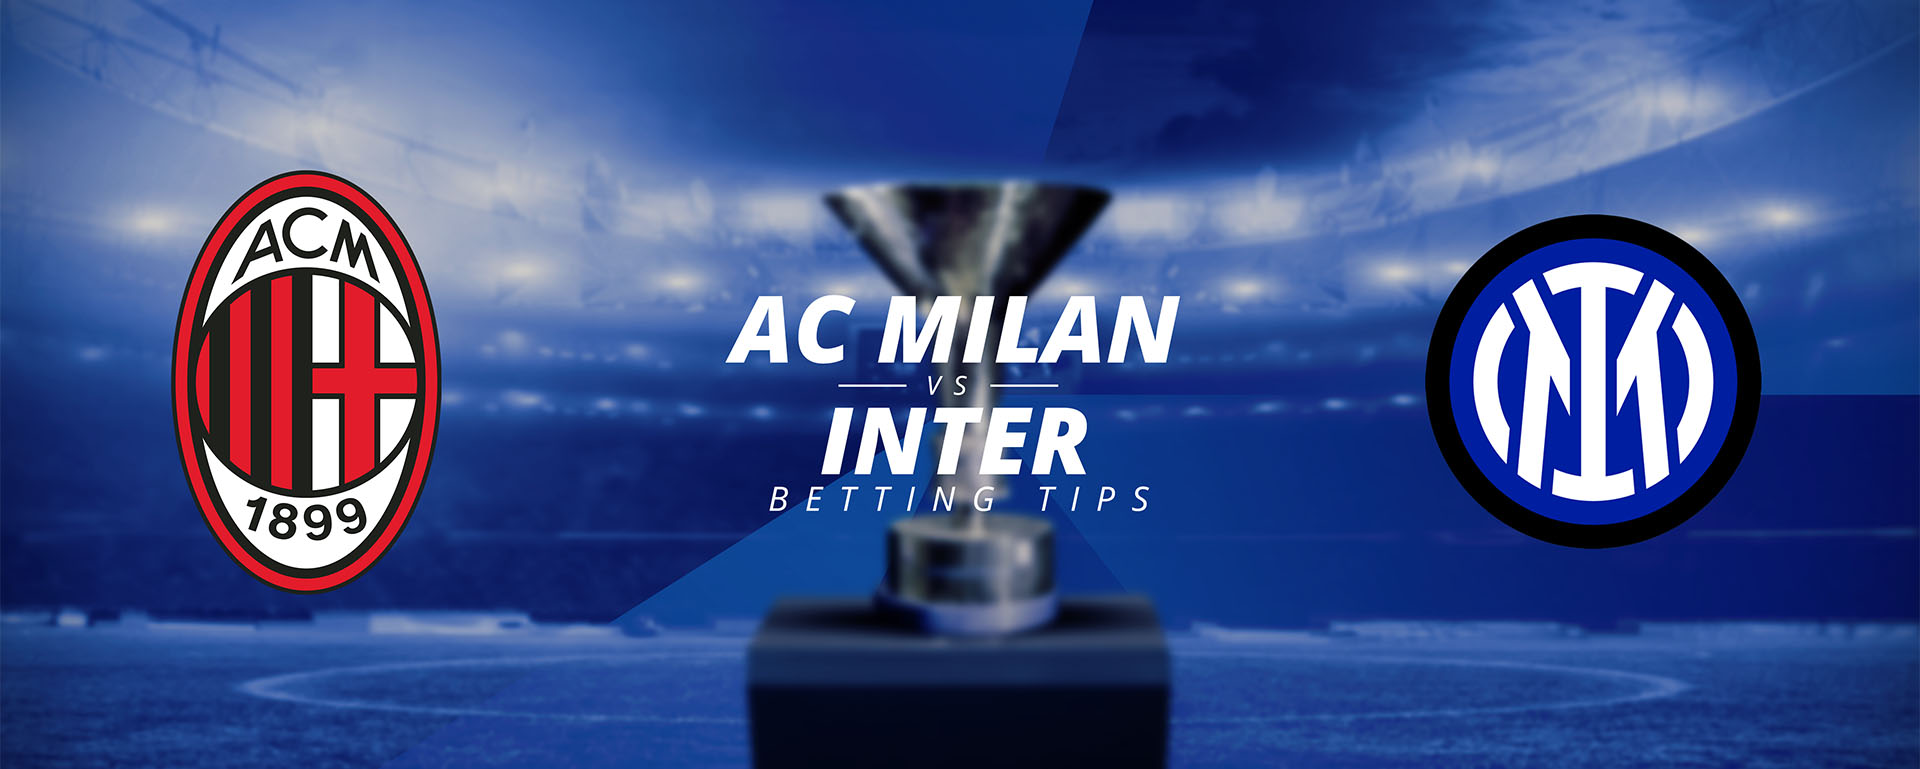 AC MILAN VS INTER: BETTING TIPS